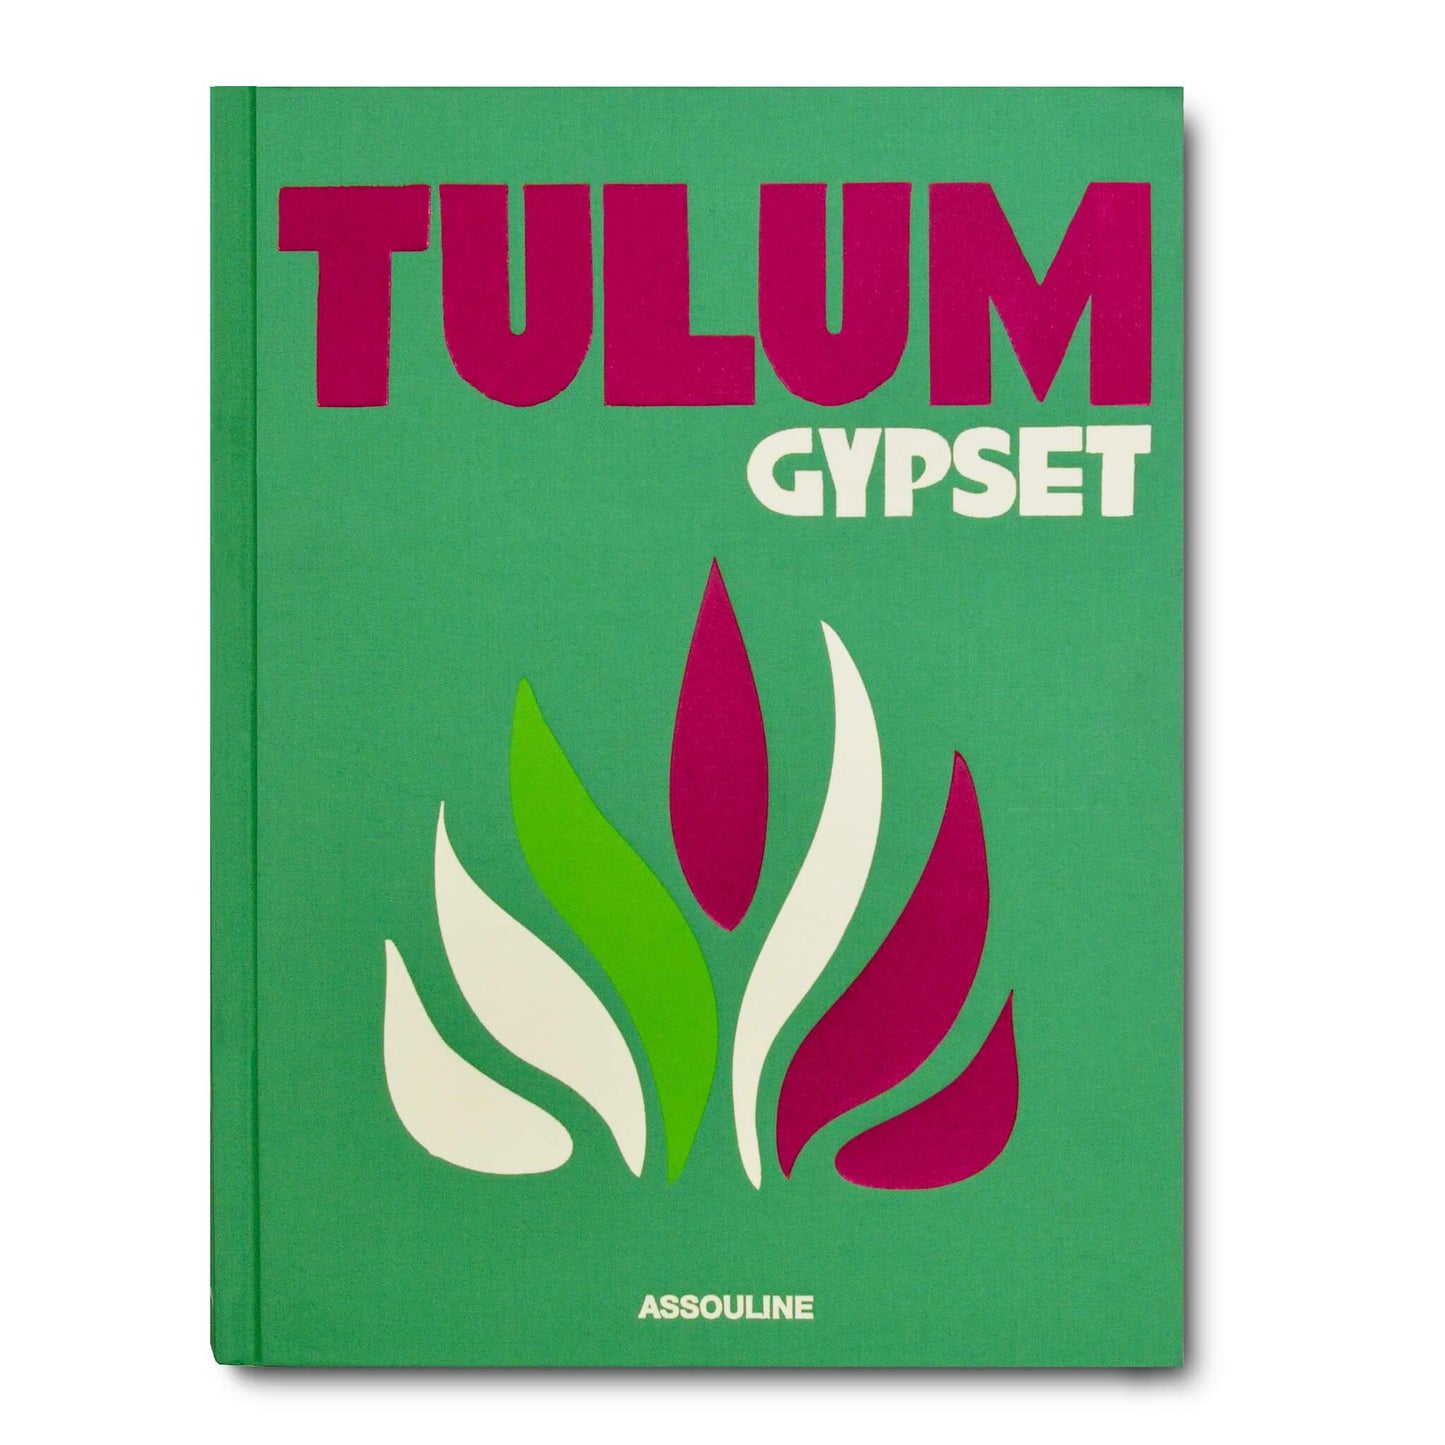 Travel Book Books in Tulum Gypset at Wrapsody